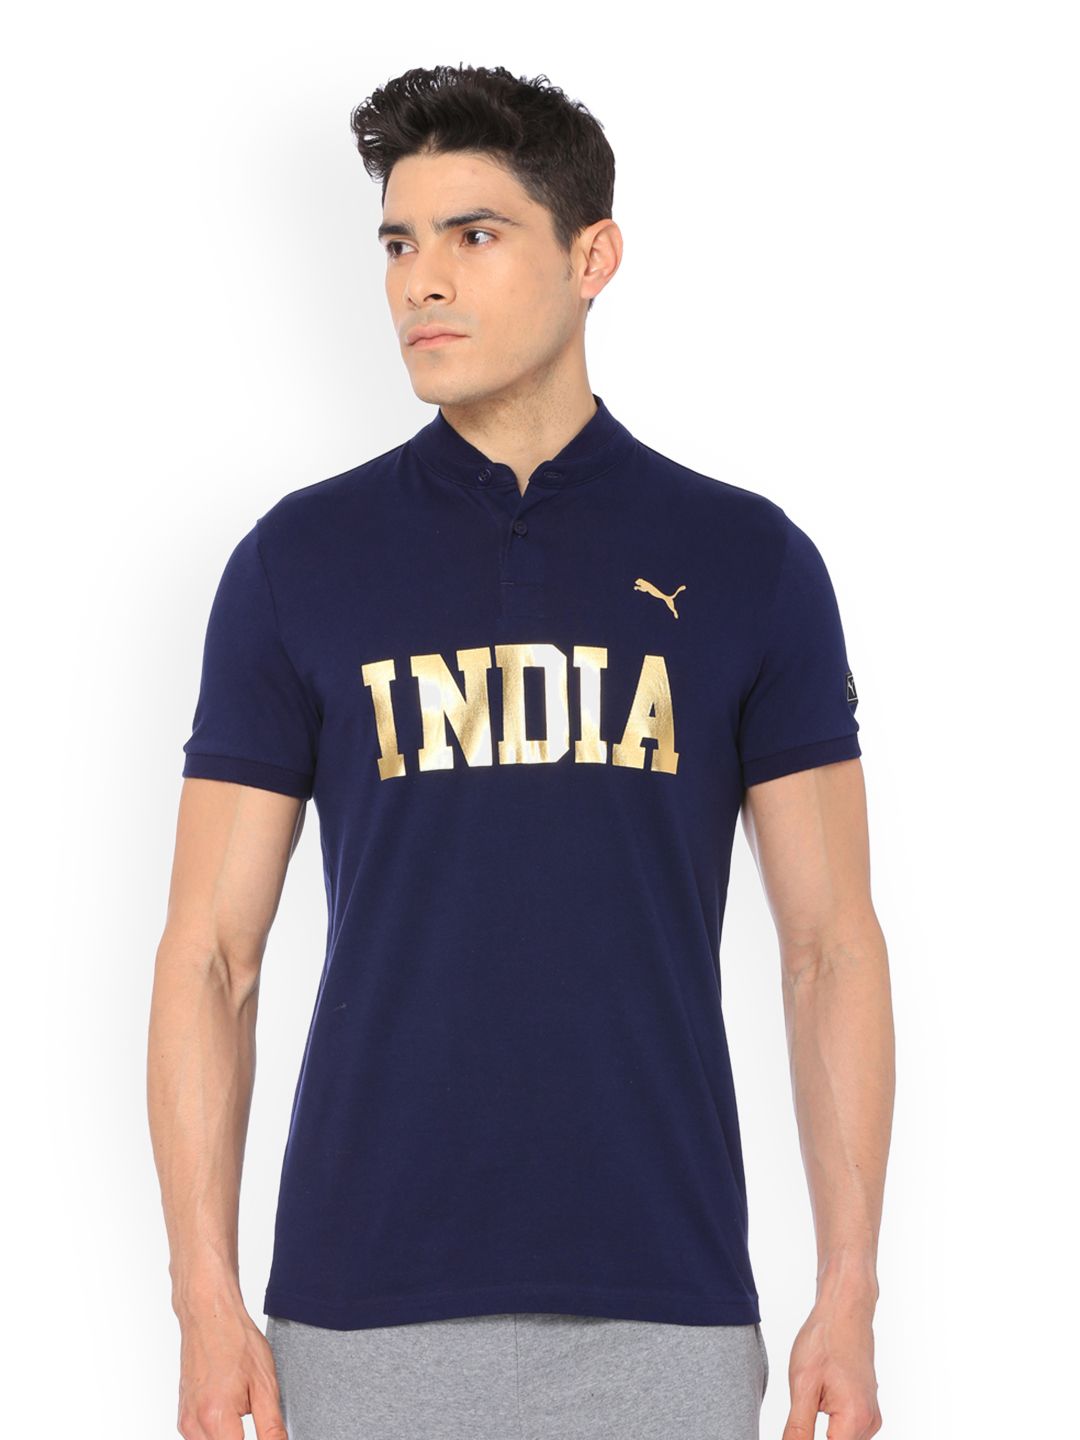 Puma Unisex Blue Printed one8 Victory Mandarin Collar T-shirt Price in India